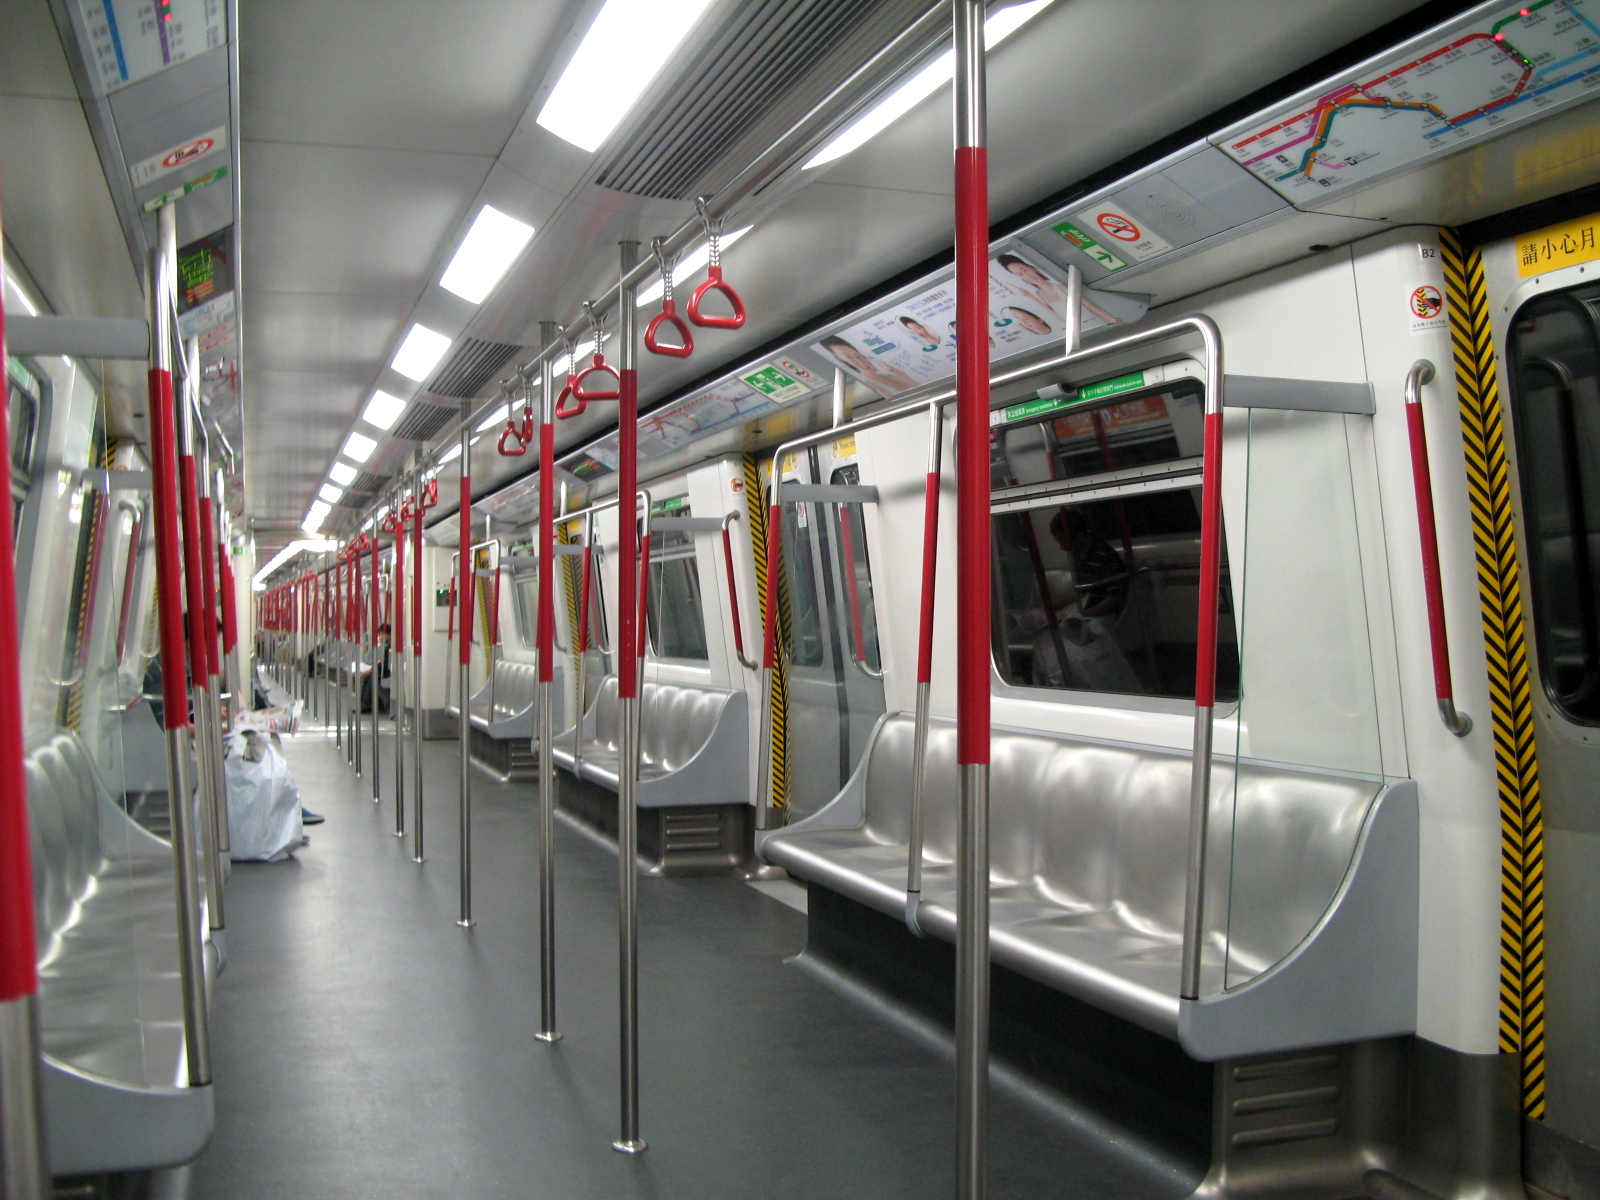 HK_MTR_M-Trains_Interior.jpg